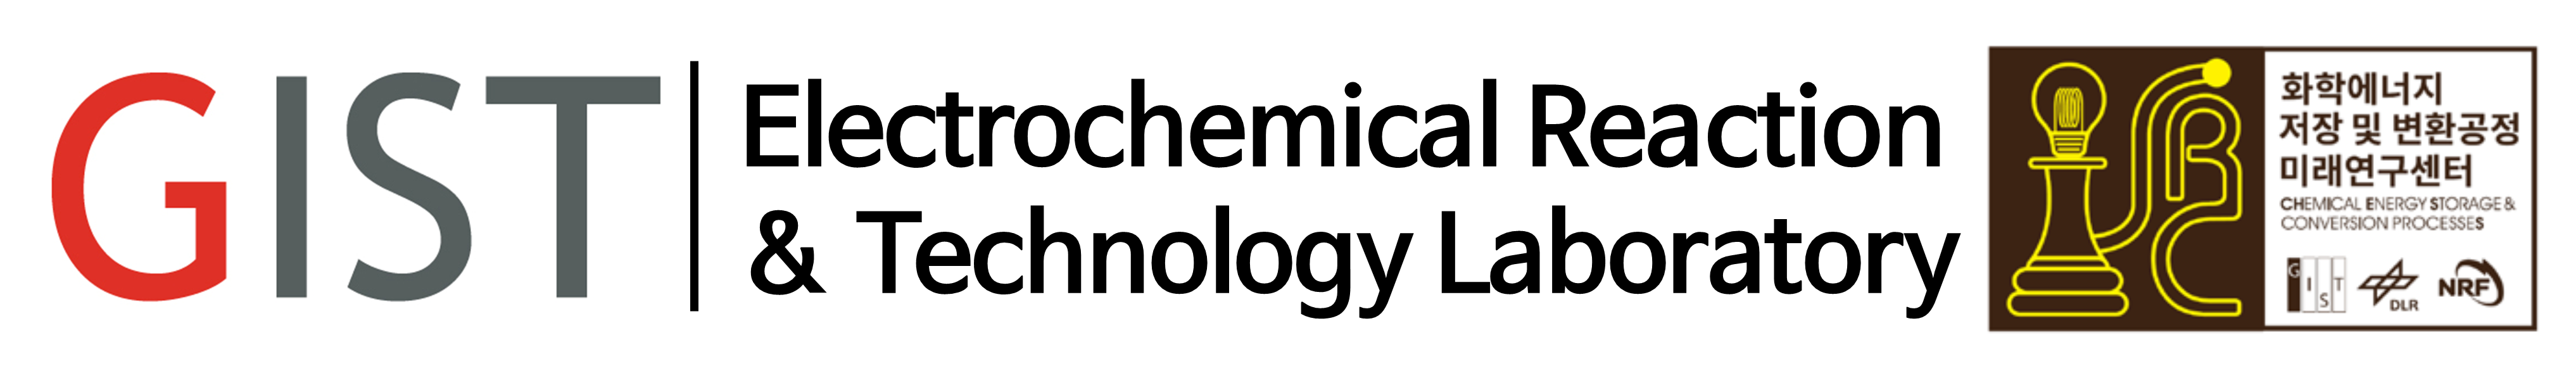 Electrochemical Reaction & Technology Laboratory